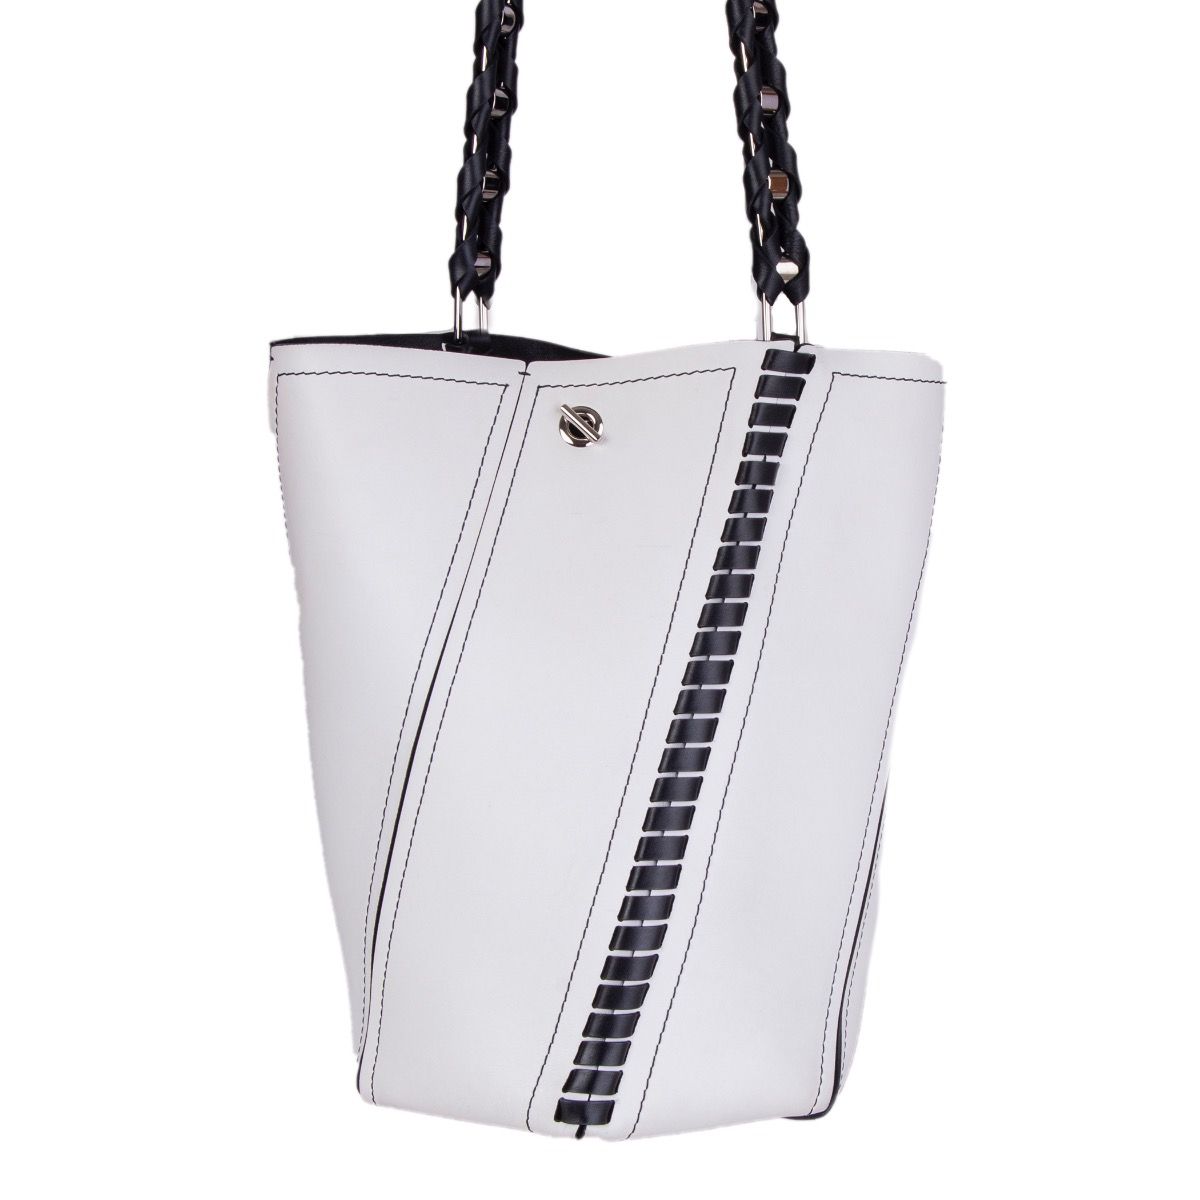 Small leather women's cross body bag Hexagonal white zipper phone bag Passport purse